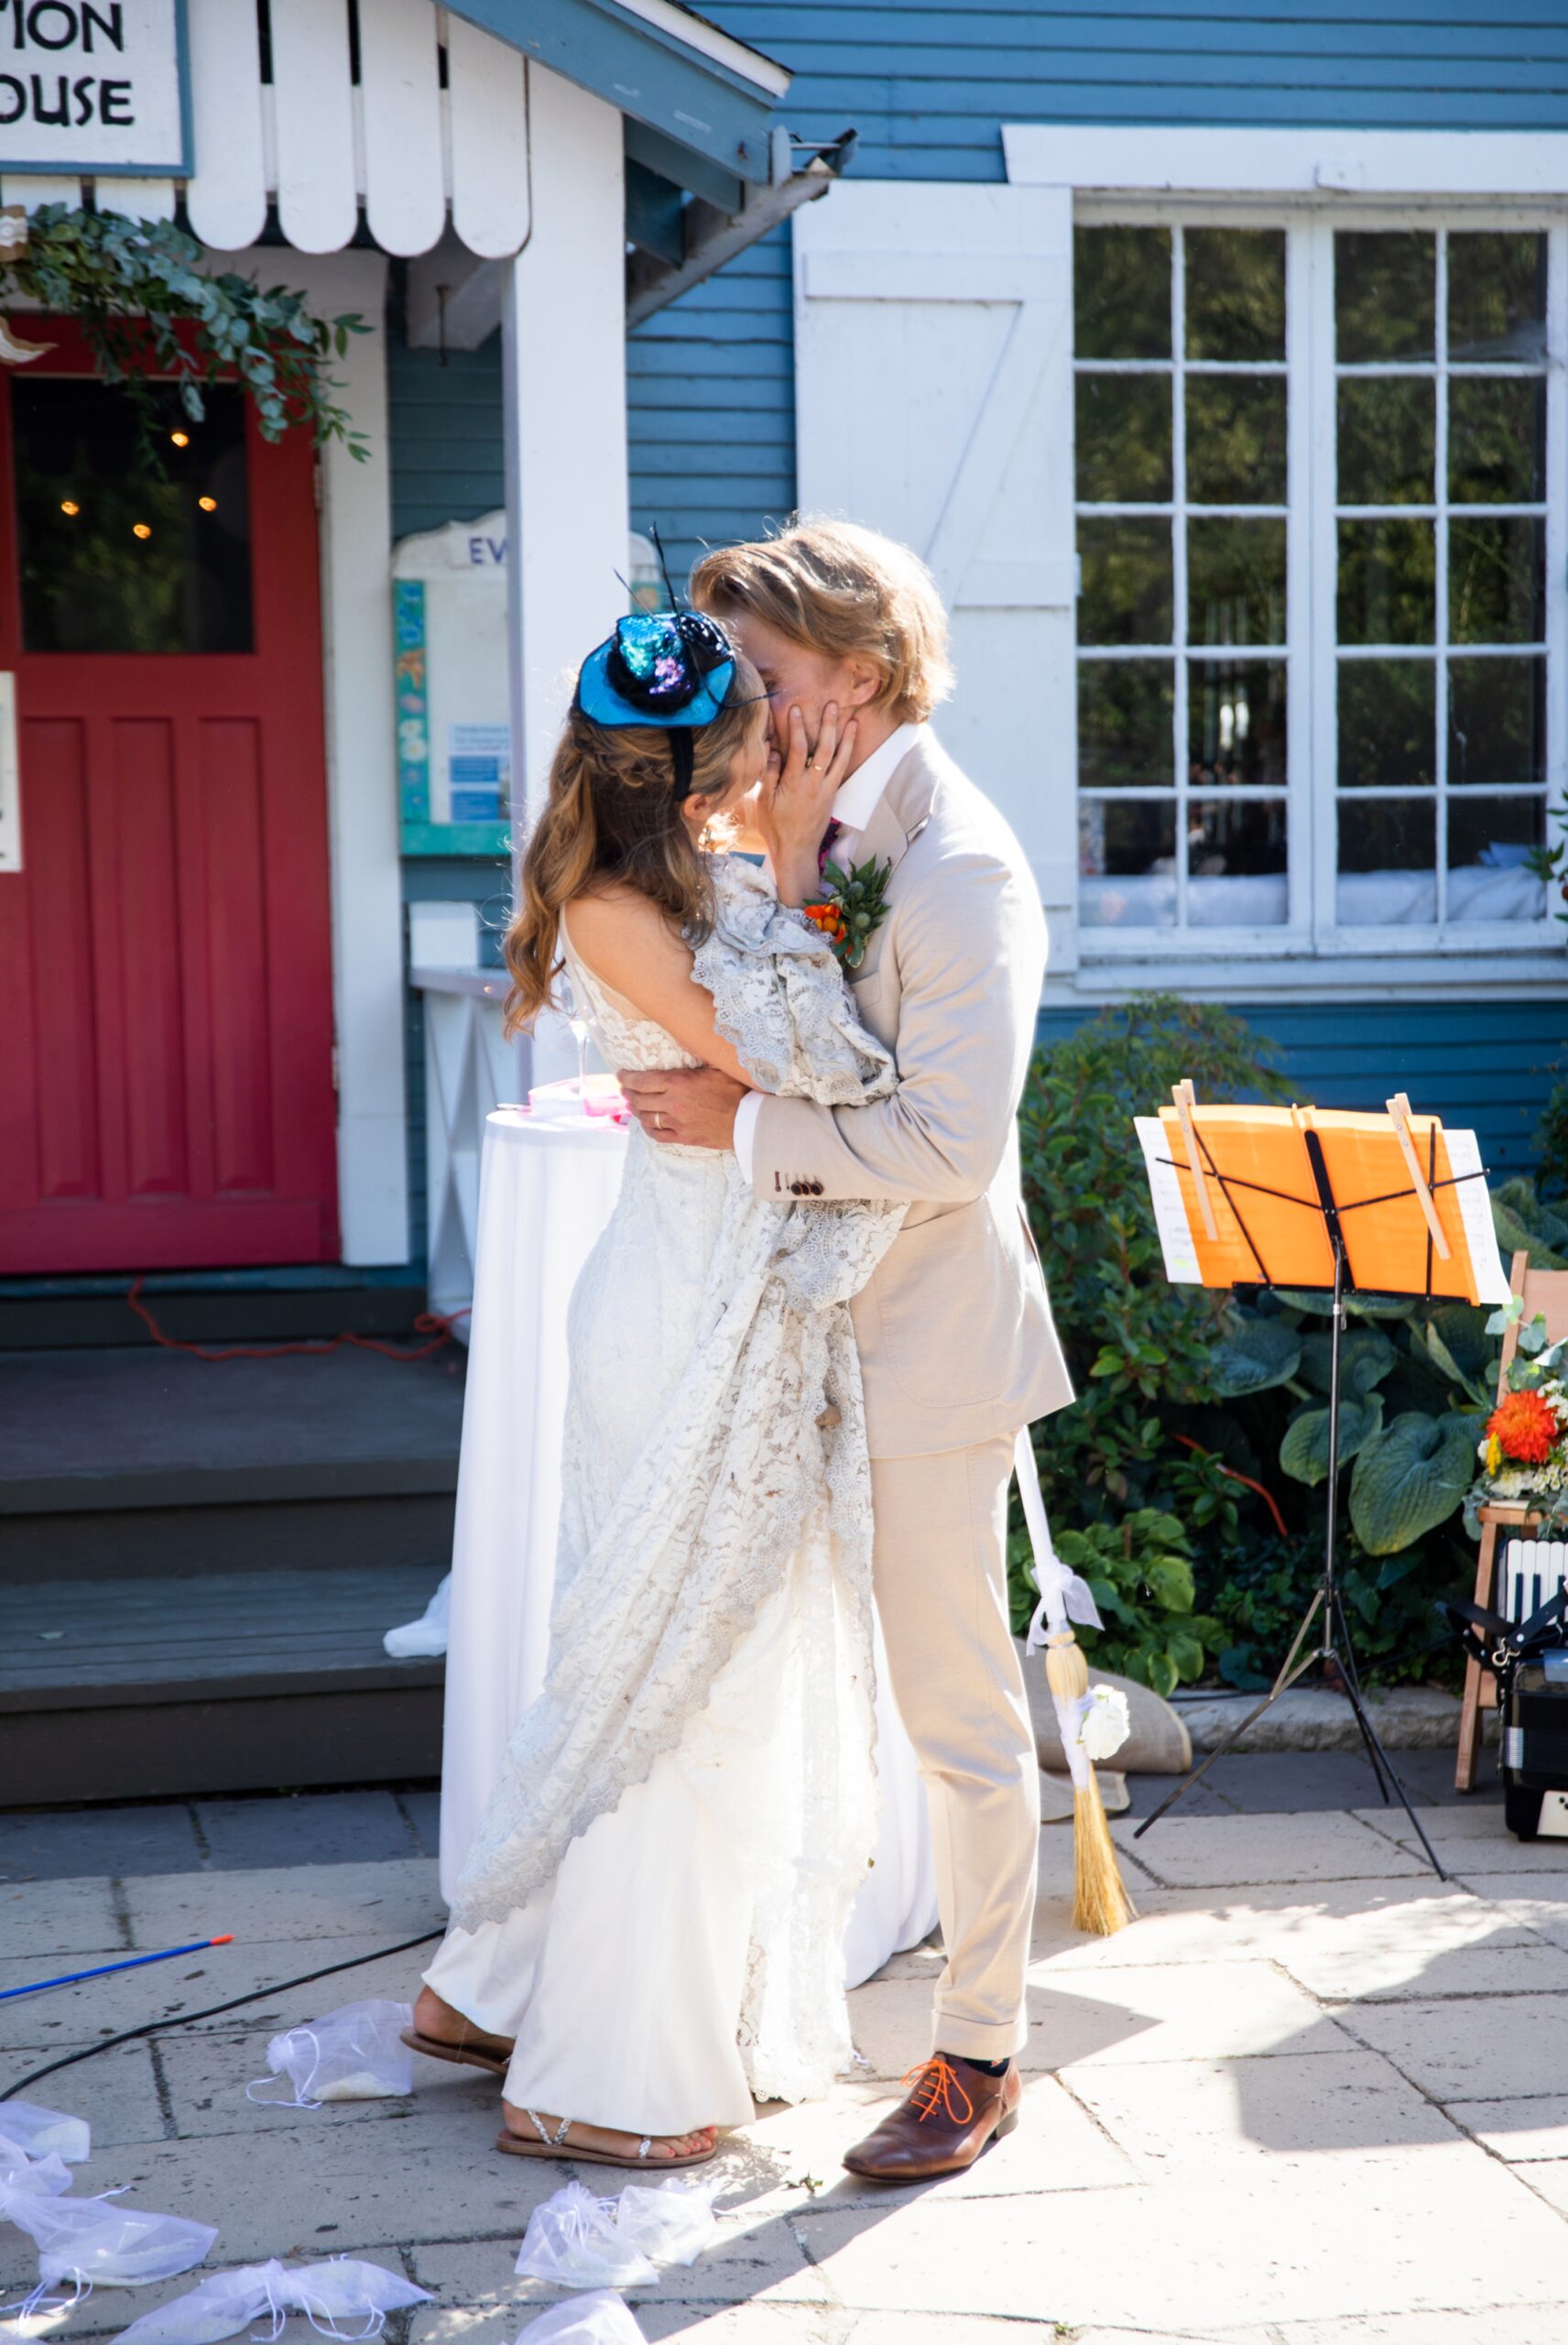 Wedding ceremony first kiss